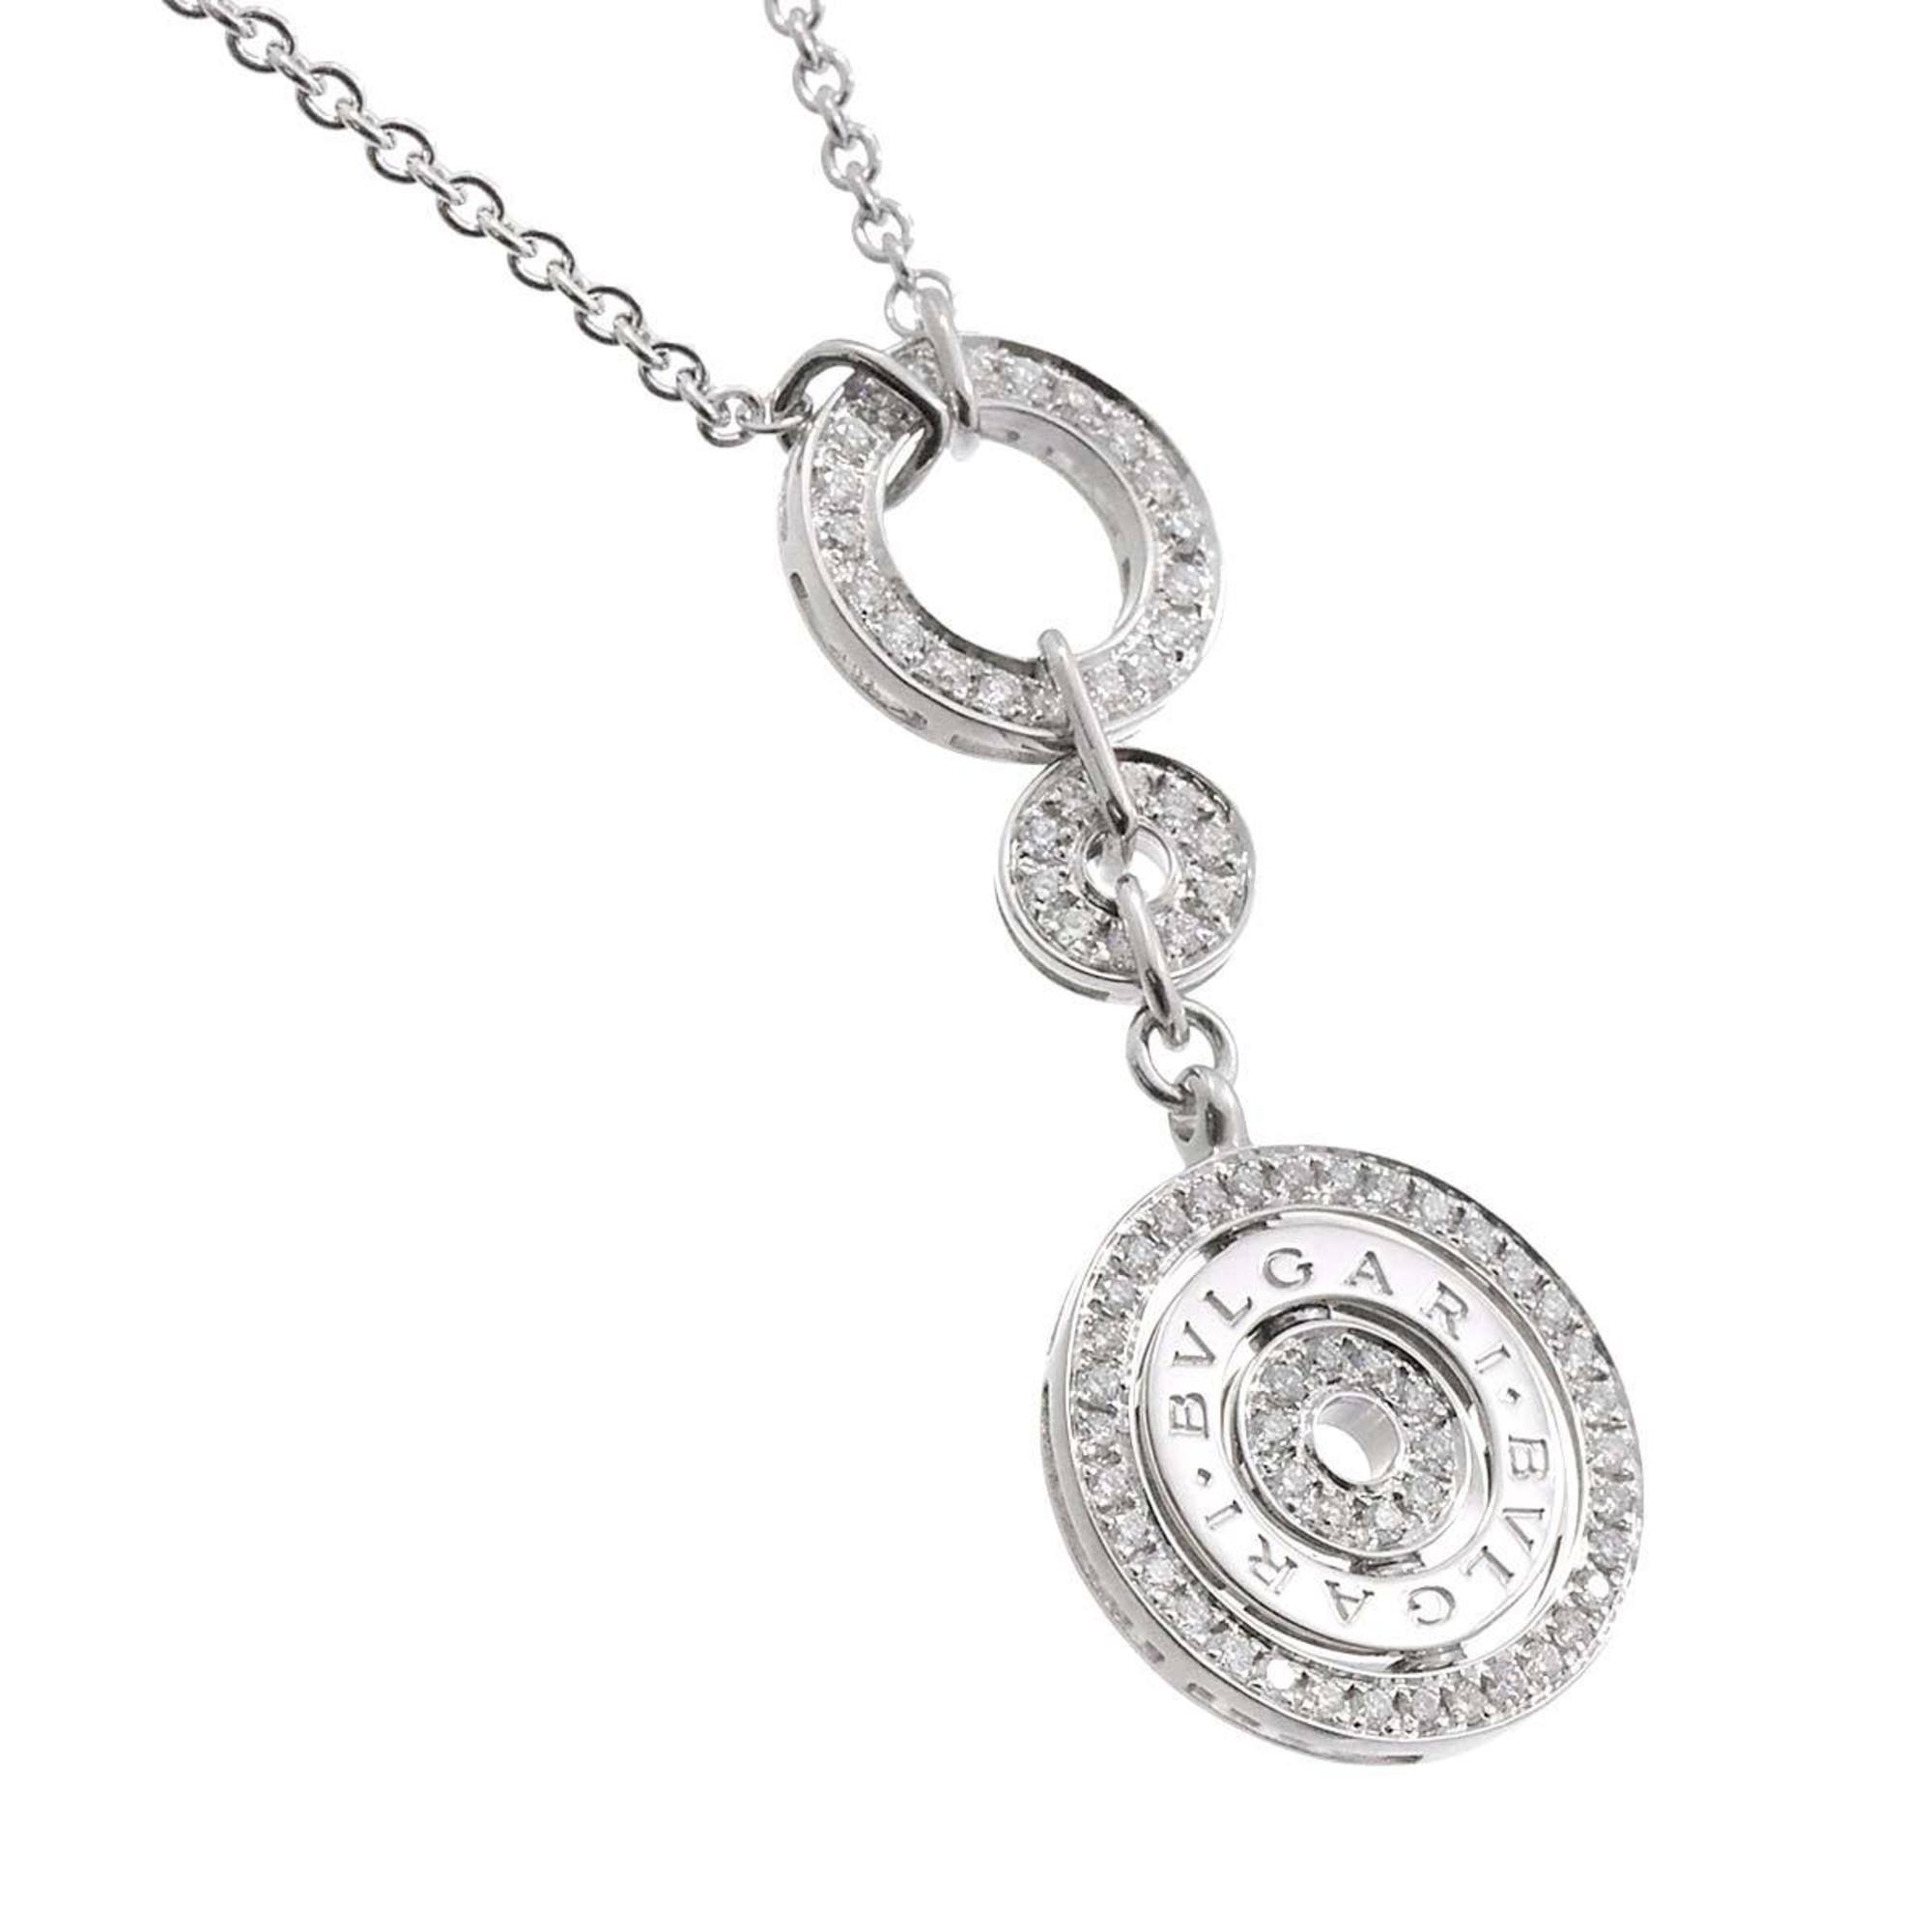 BVLGARI Astrale Cherki Diamond Necklace 47cm K18 WG White Gold 750